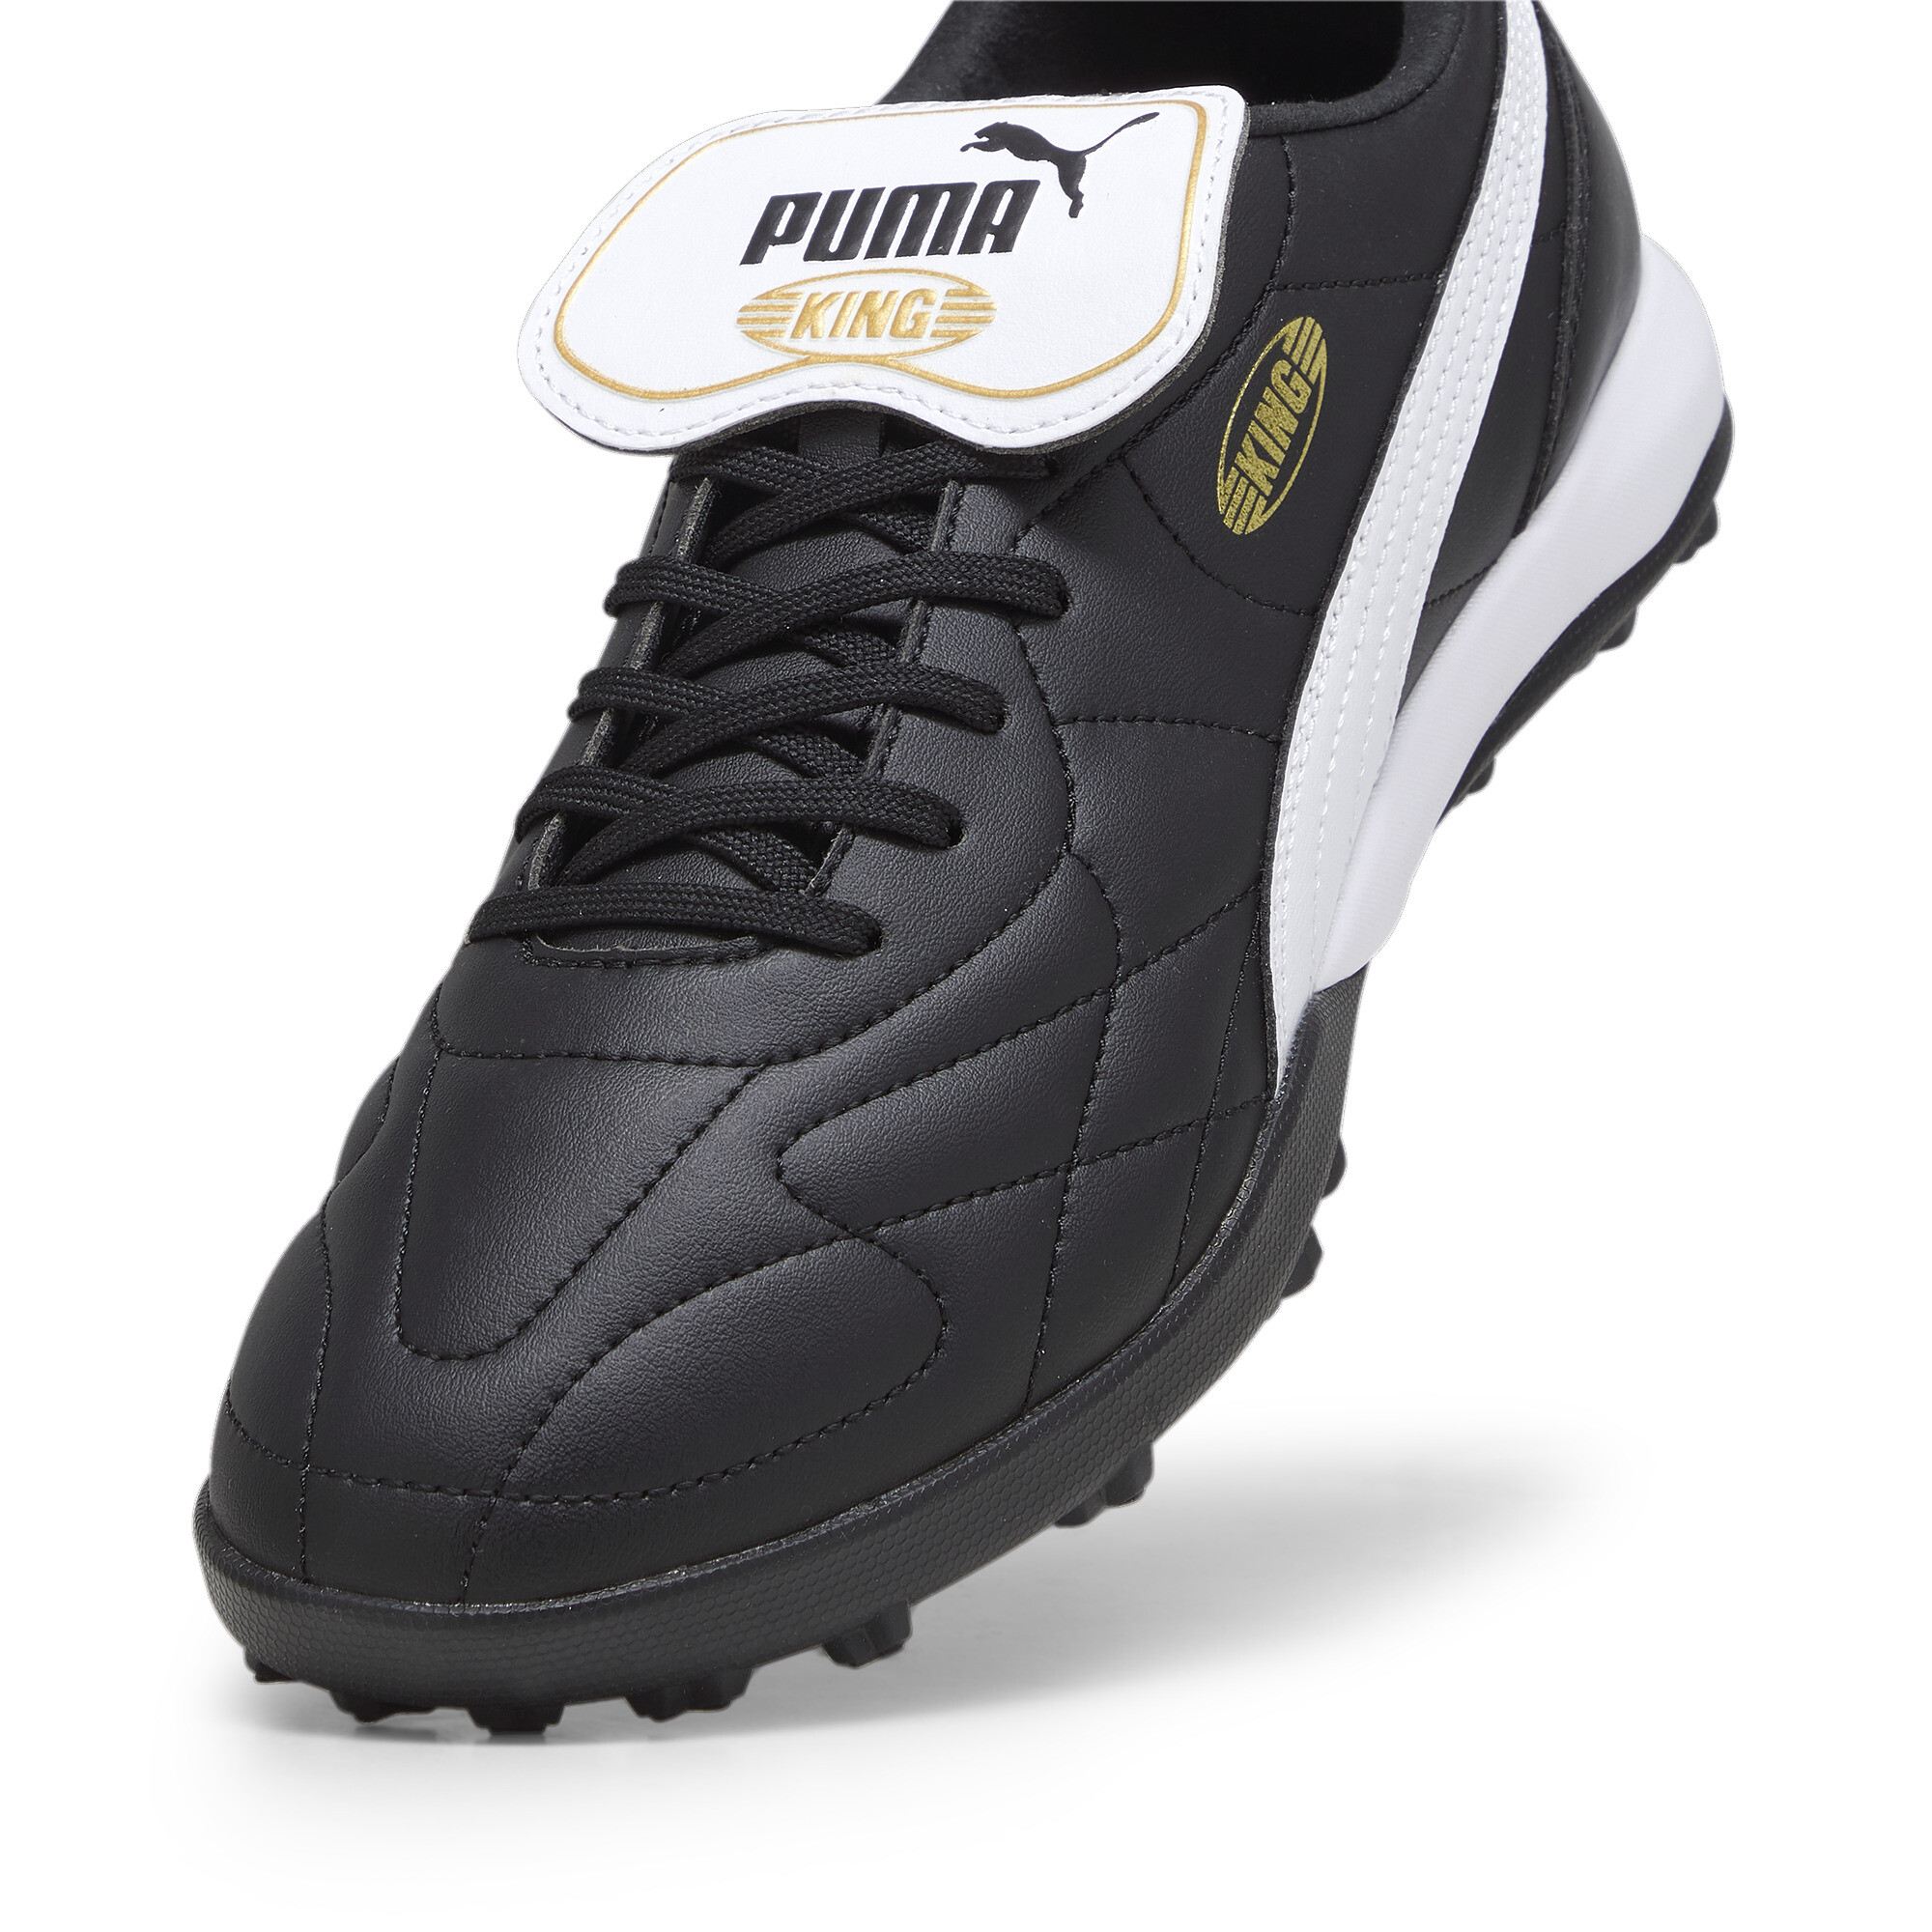 Men's PUMA KING TOP TT Football Boots In Black/Gold, Size EU 43